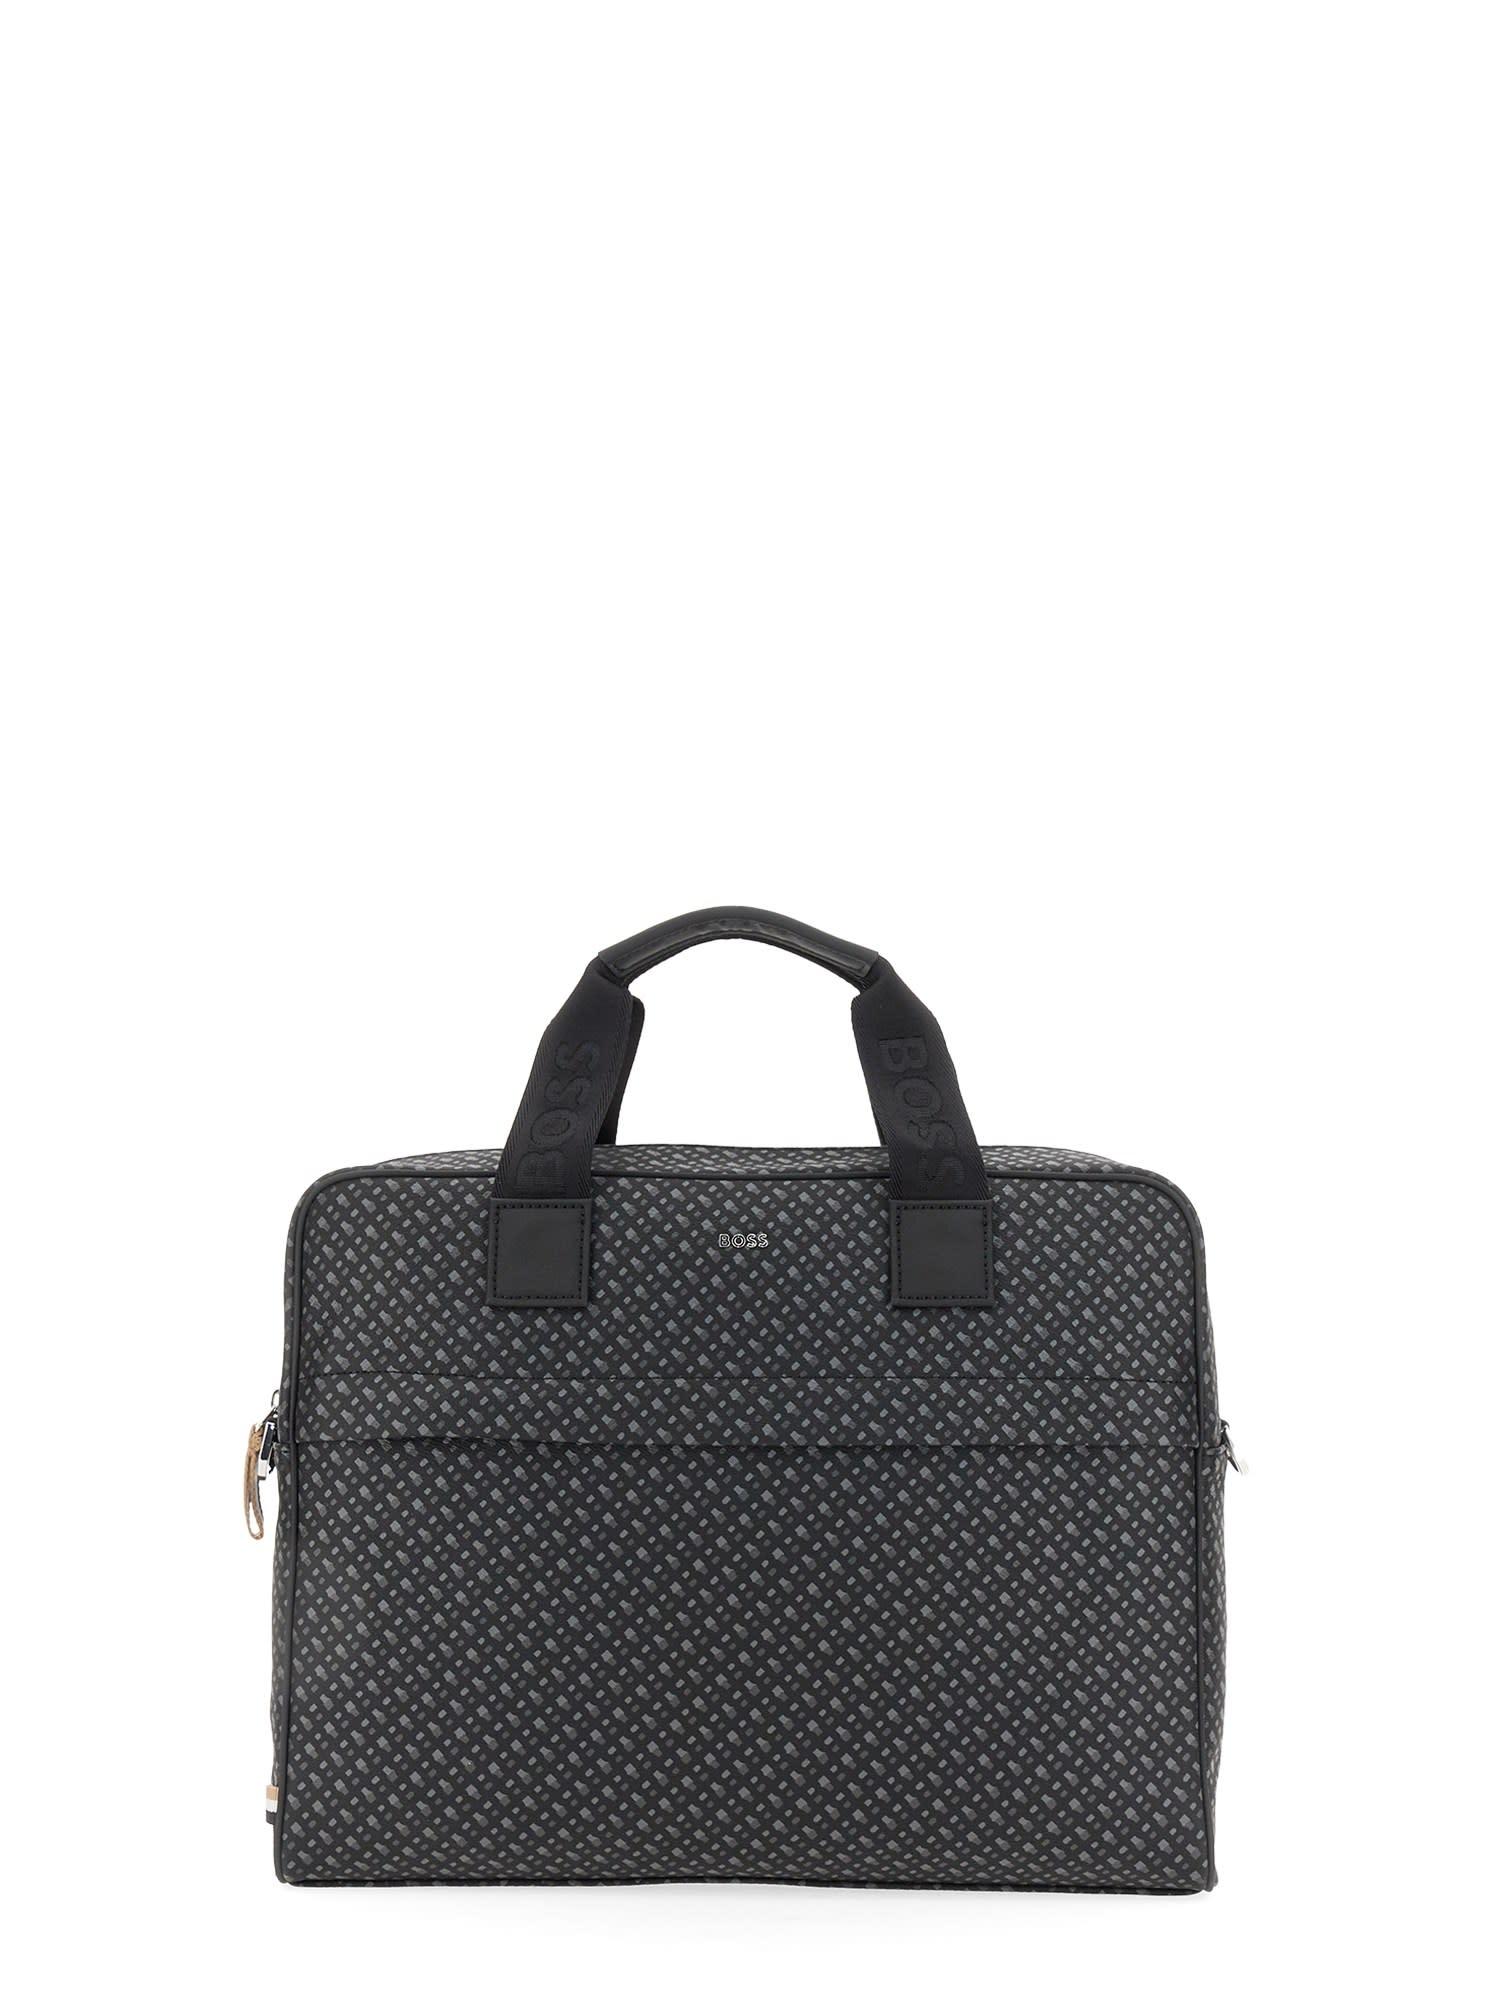 HUGO BOSS Briefcase in Black for Men | Lyst